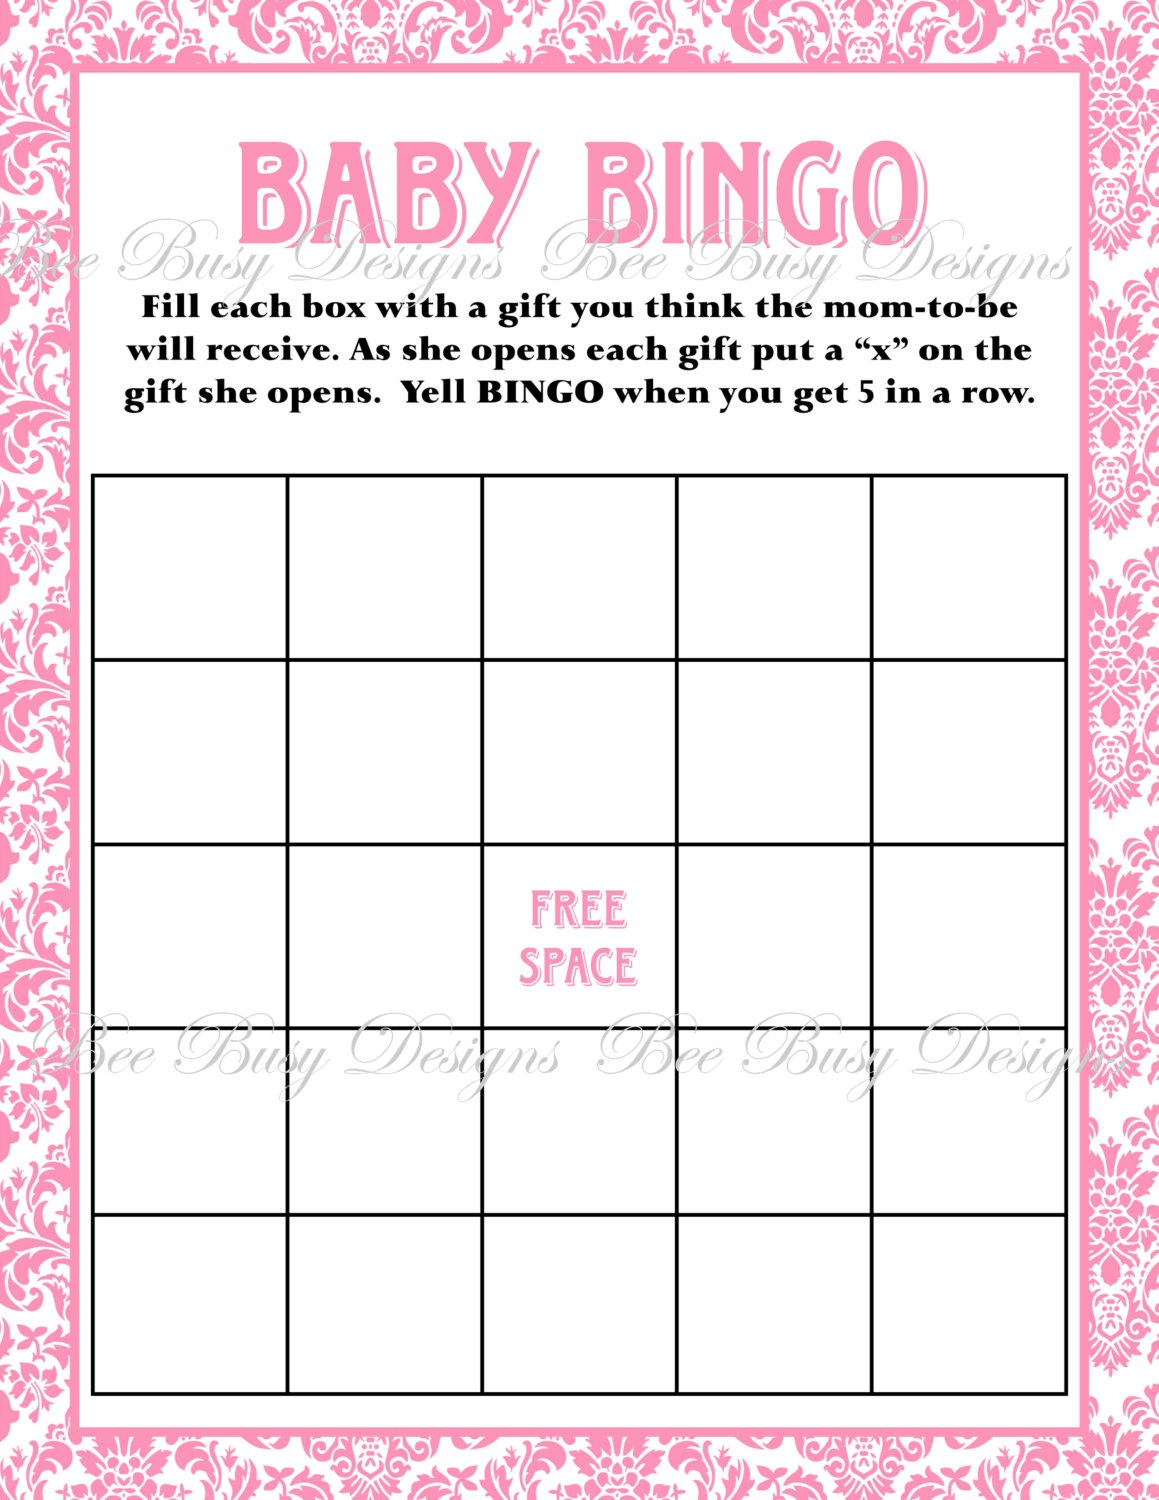 Printable Pink Damask Baby Shower Bingo Game | Bee Busy Designs - Baby Bingo Game Free Printable